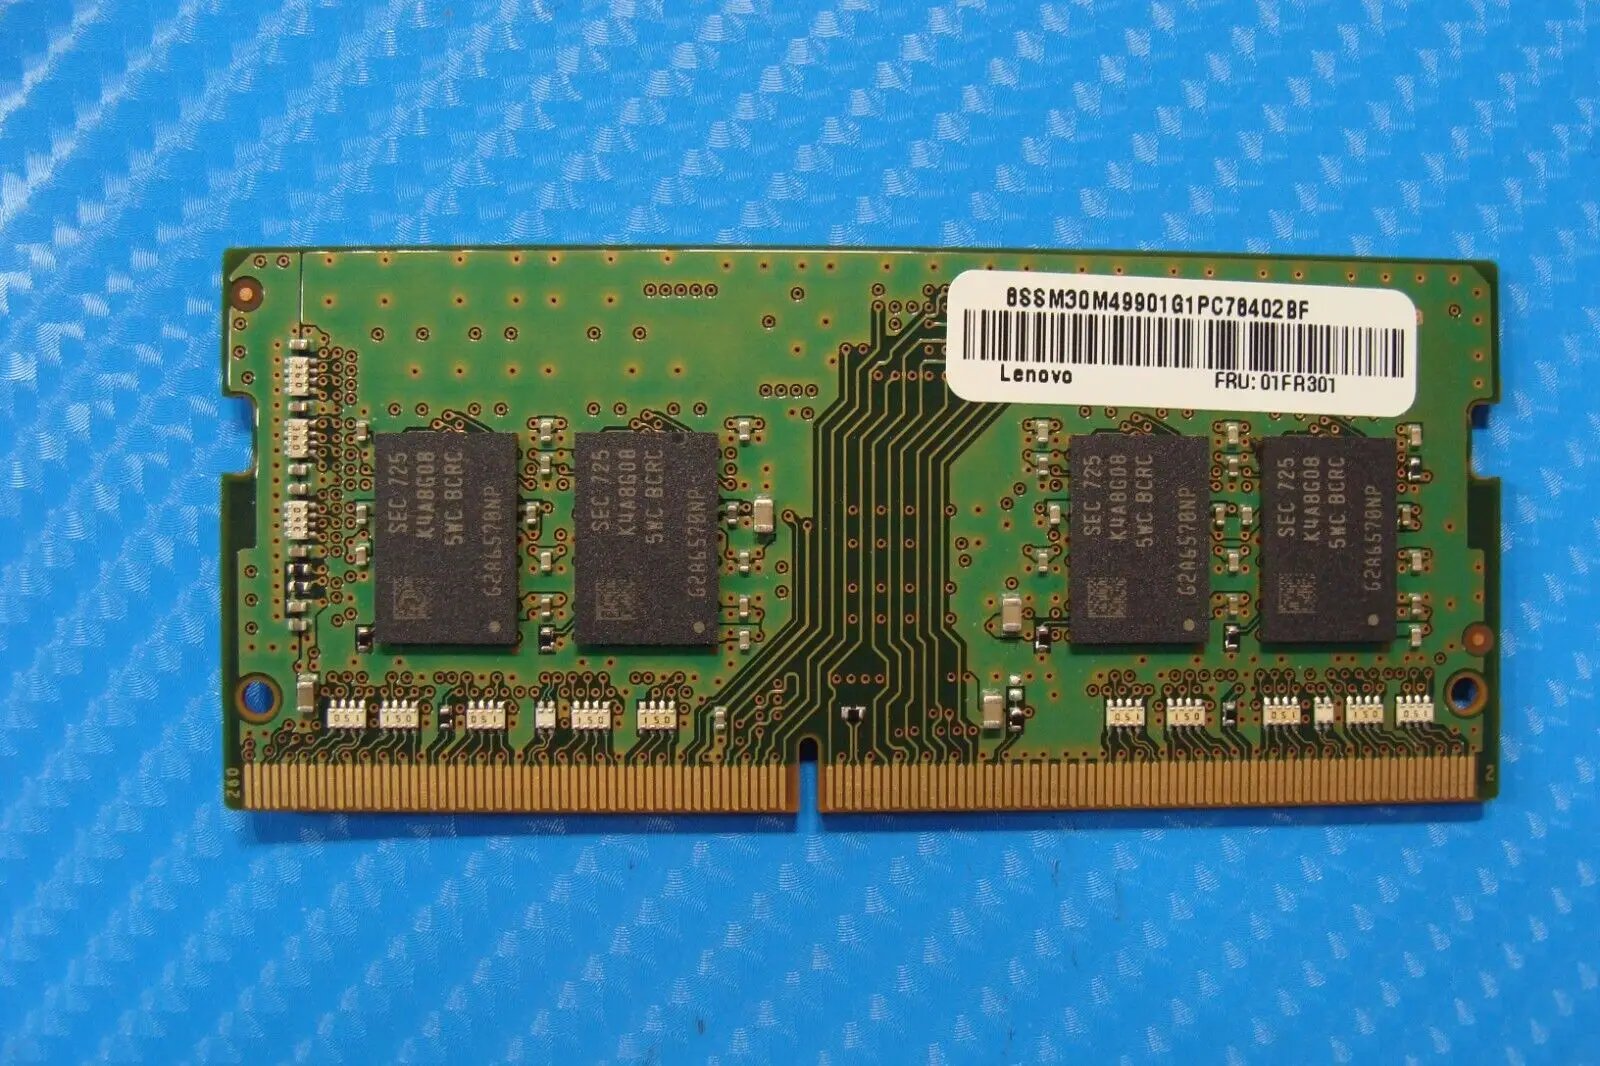 Lenovo X270 Samsung 8GB 1Rx8 PC4-2400T Memory RAM SO-DIMM M471A1K43CB1-CRC